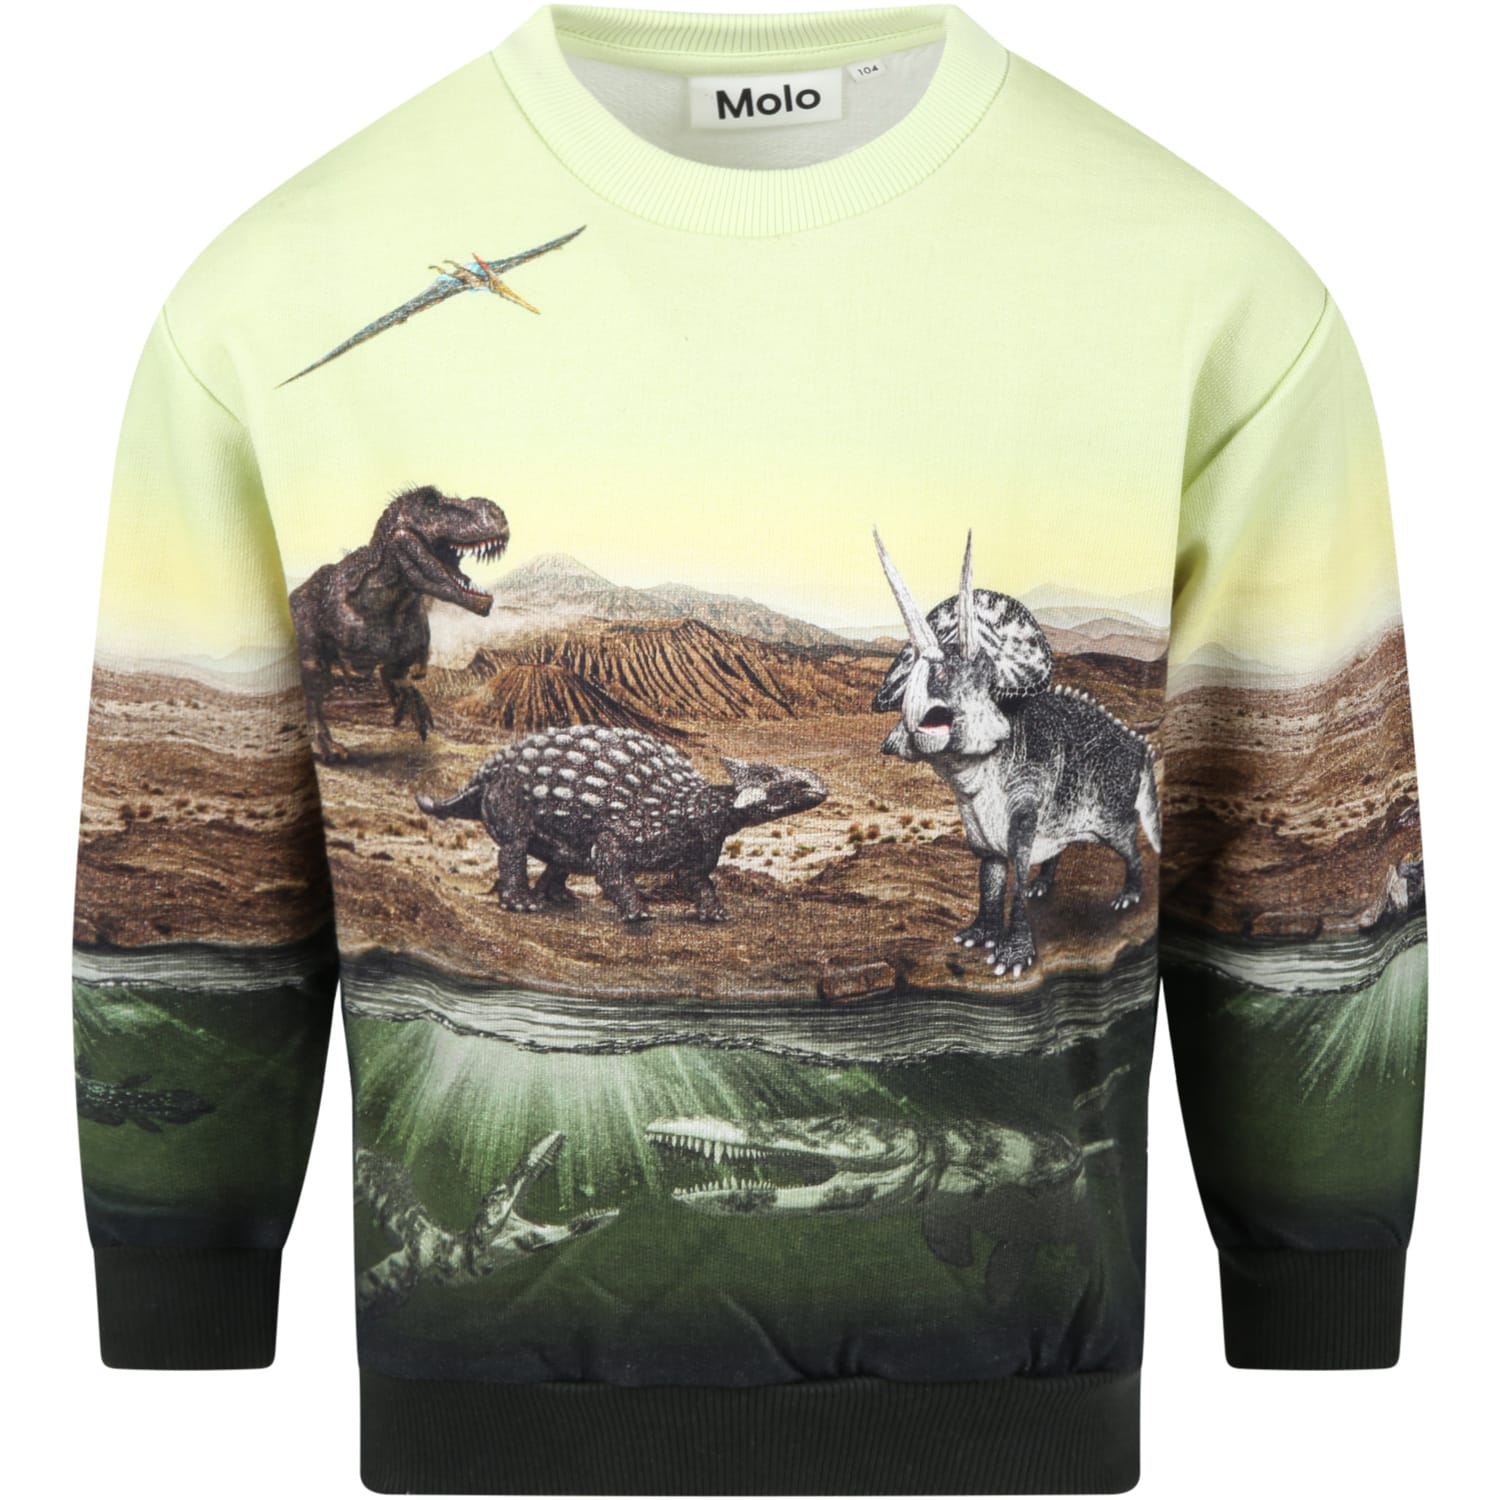 Molo Multicolr Sweatshirt For Boy With Dinosaurs